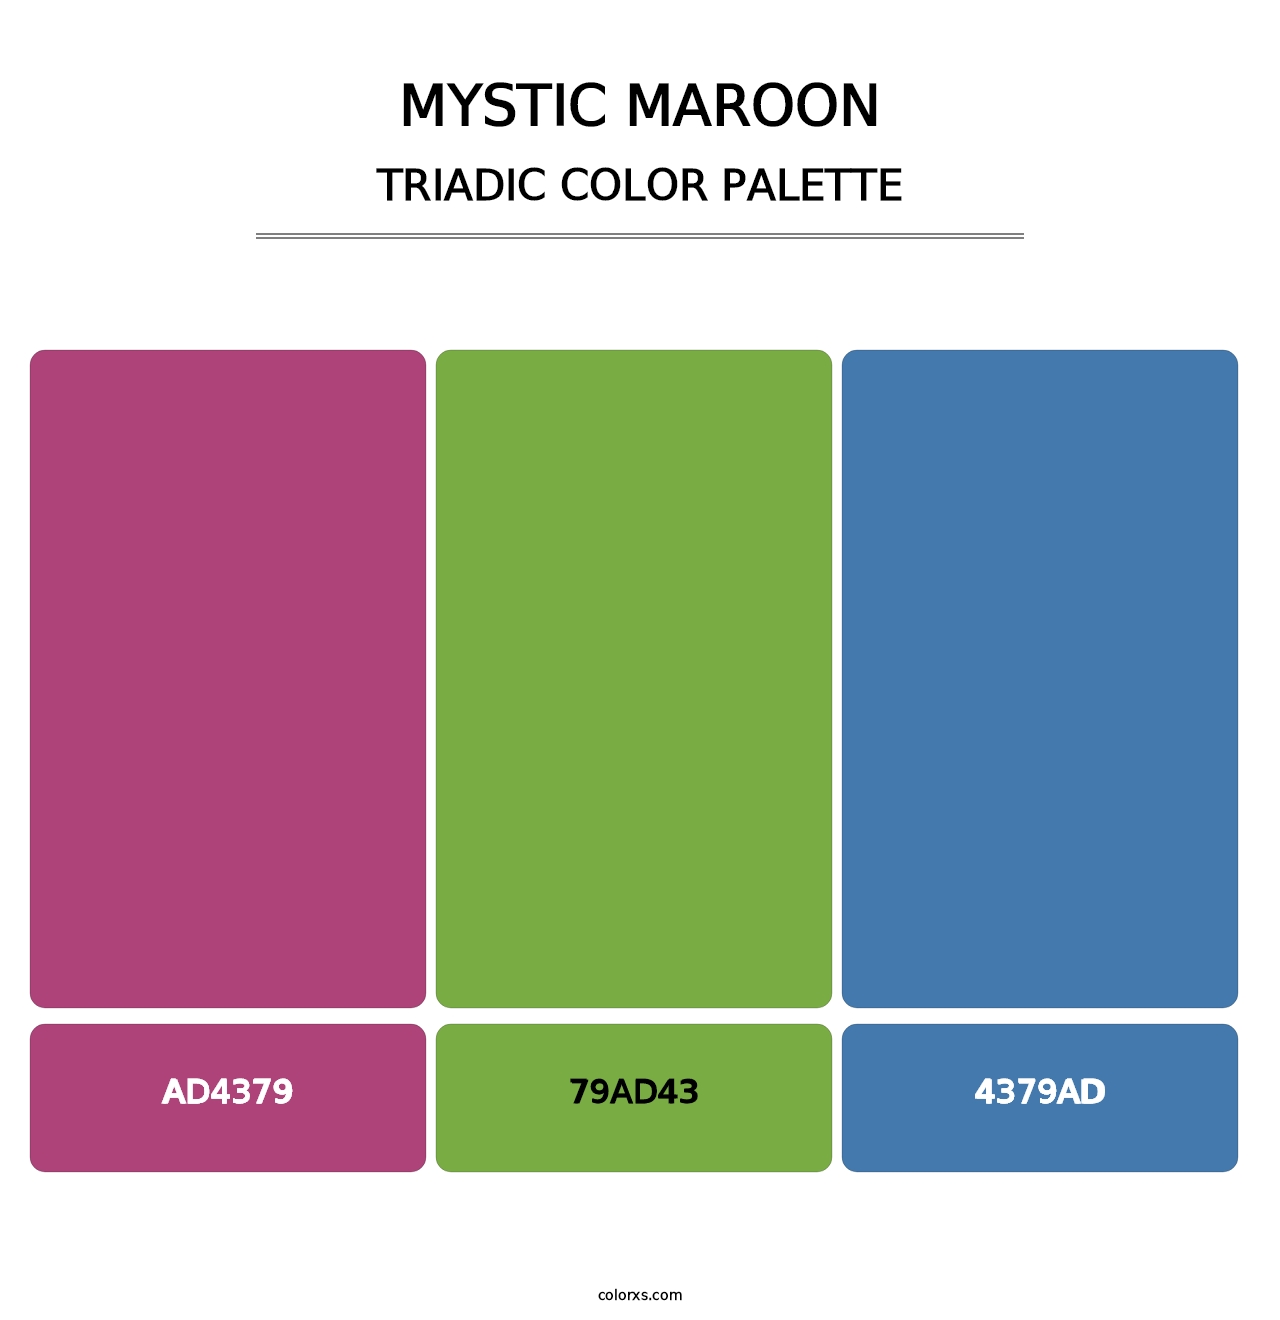 Mystic Maroon - Triadic Color Palette